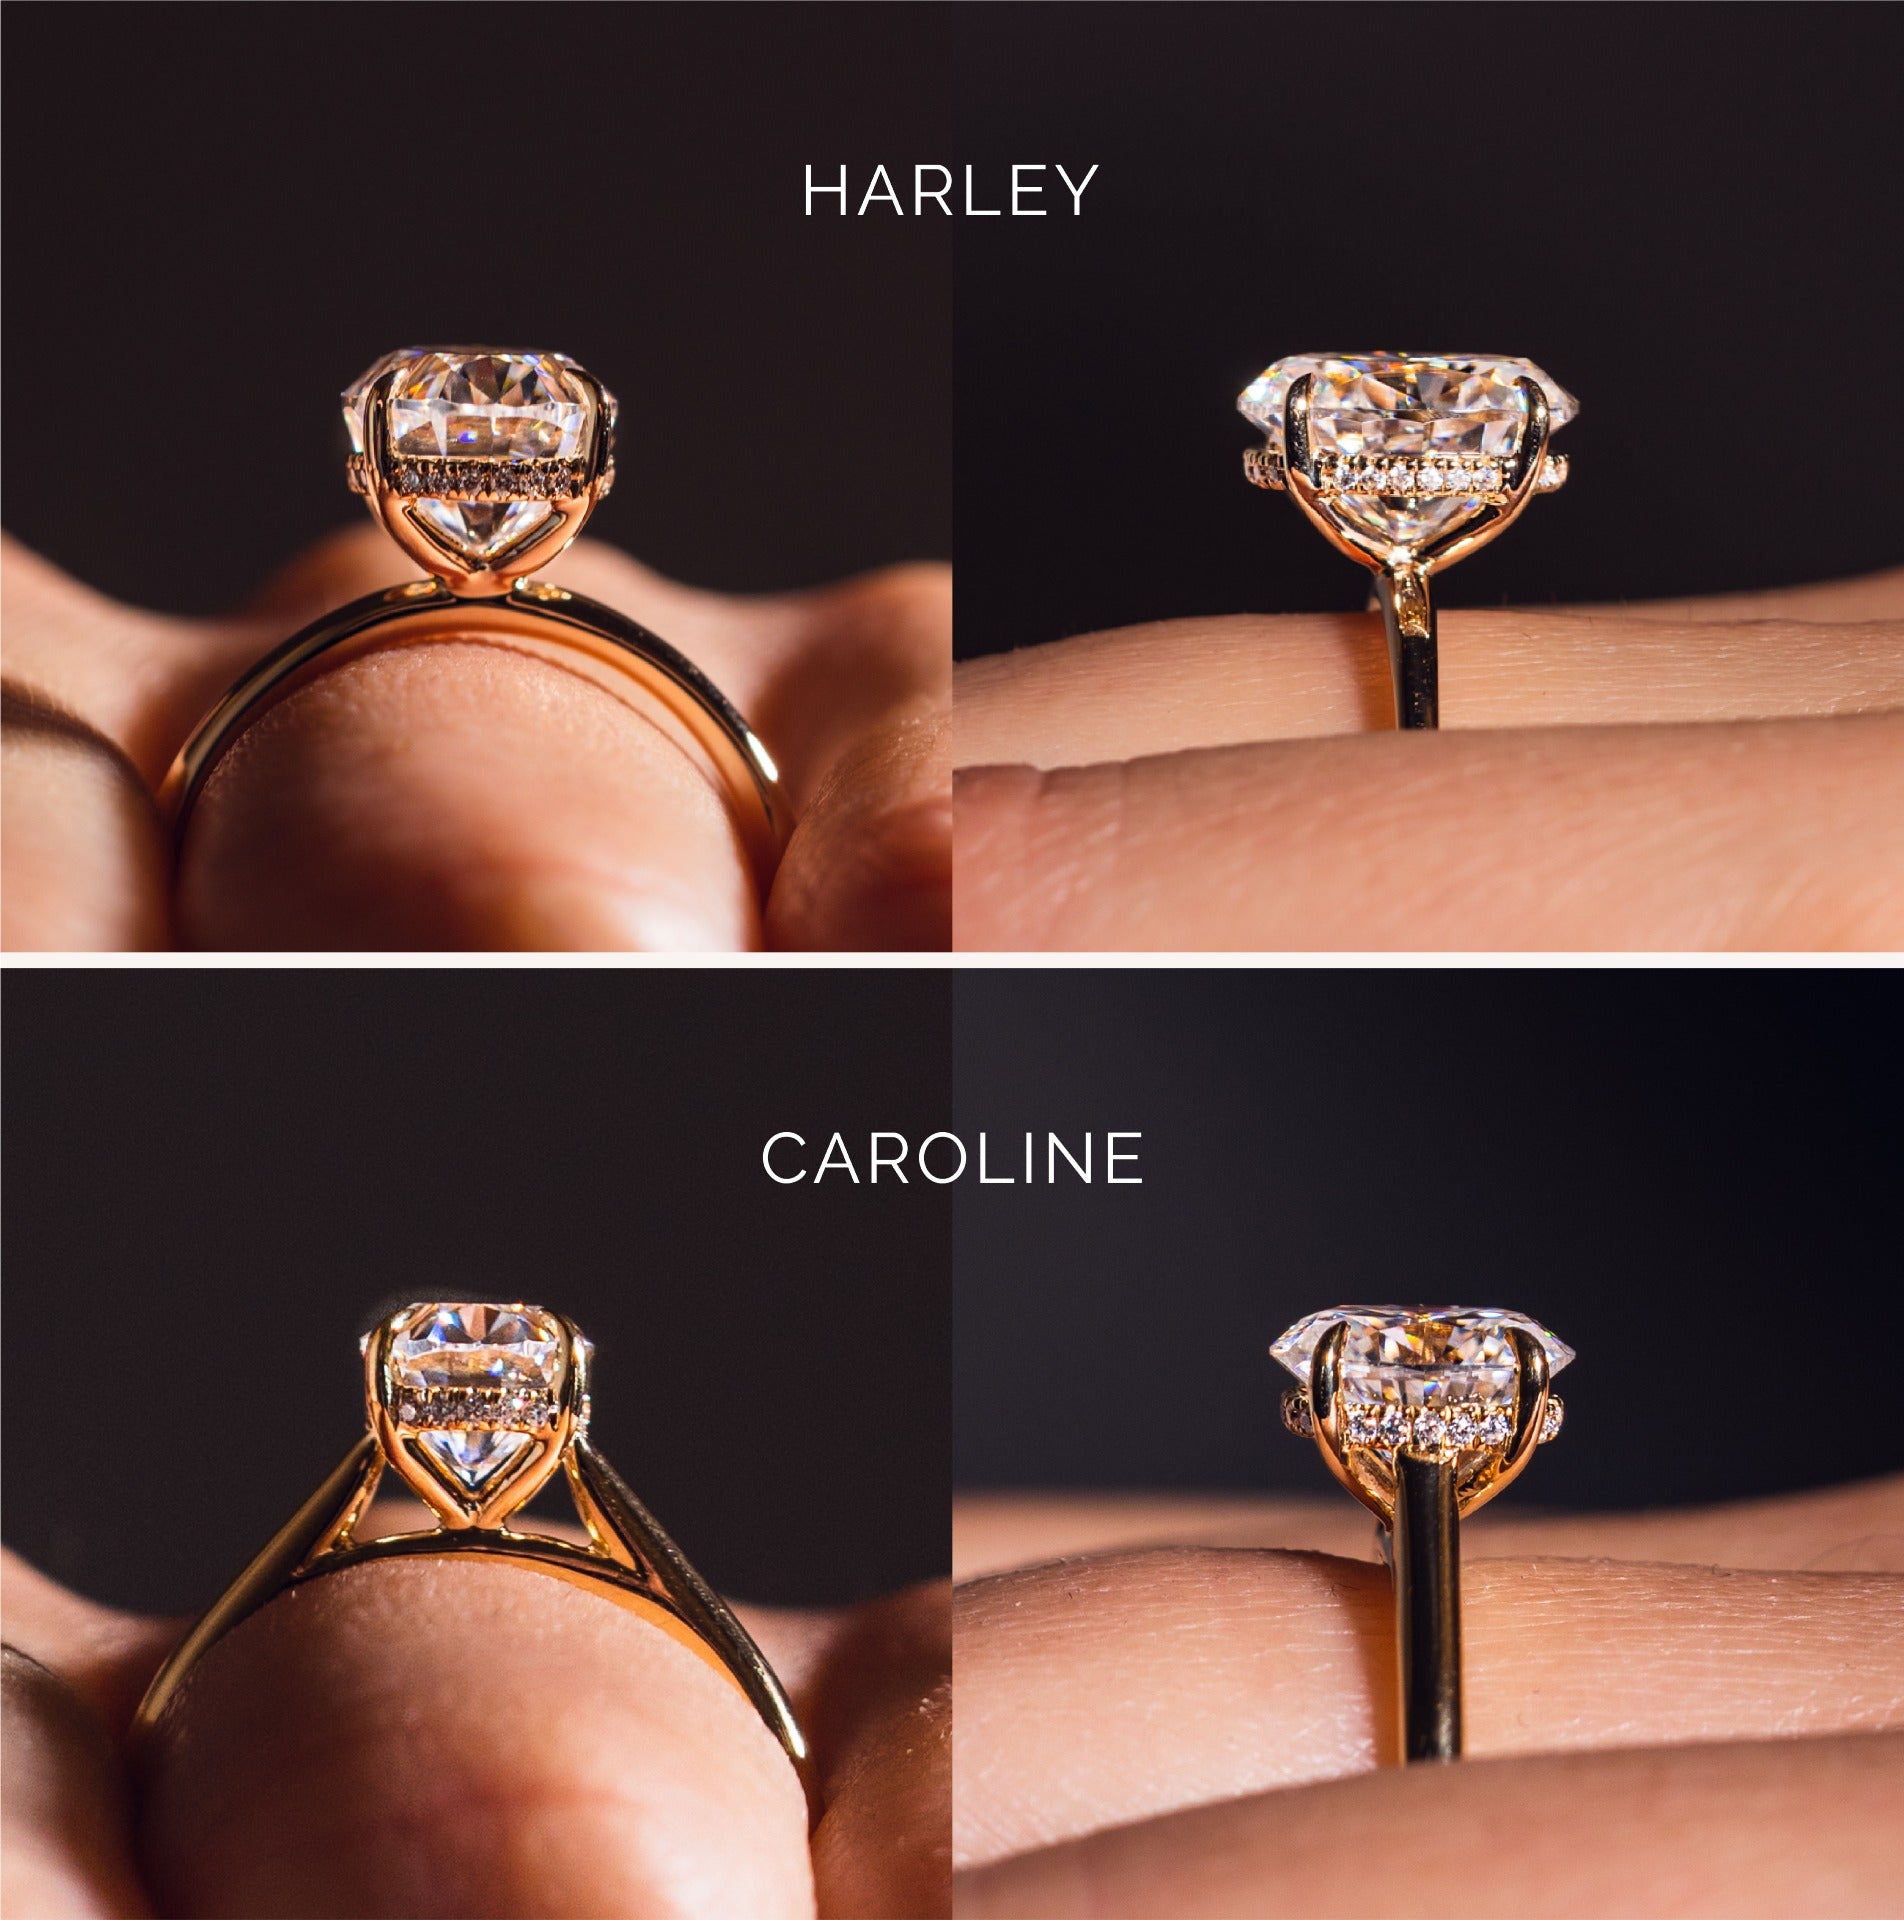 Harley vs Caroline Engagement Ring